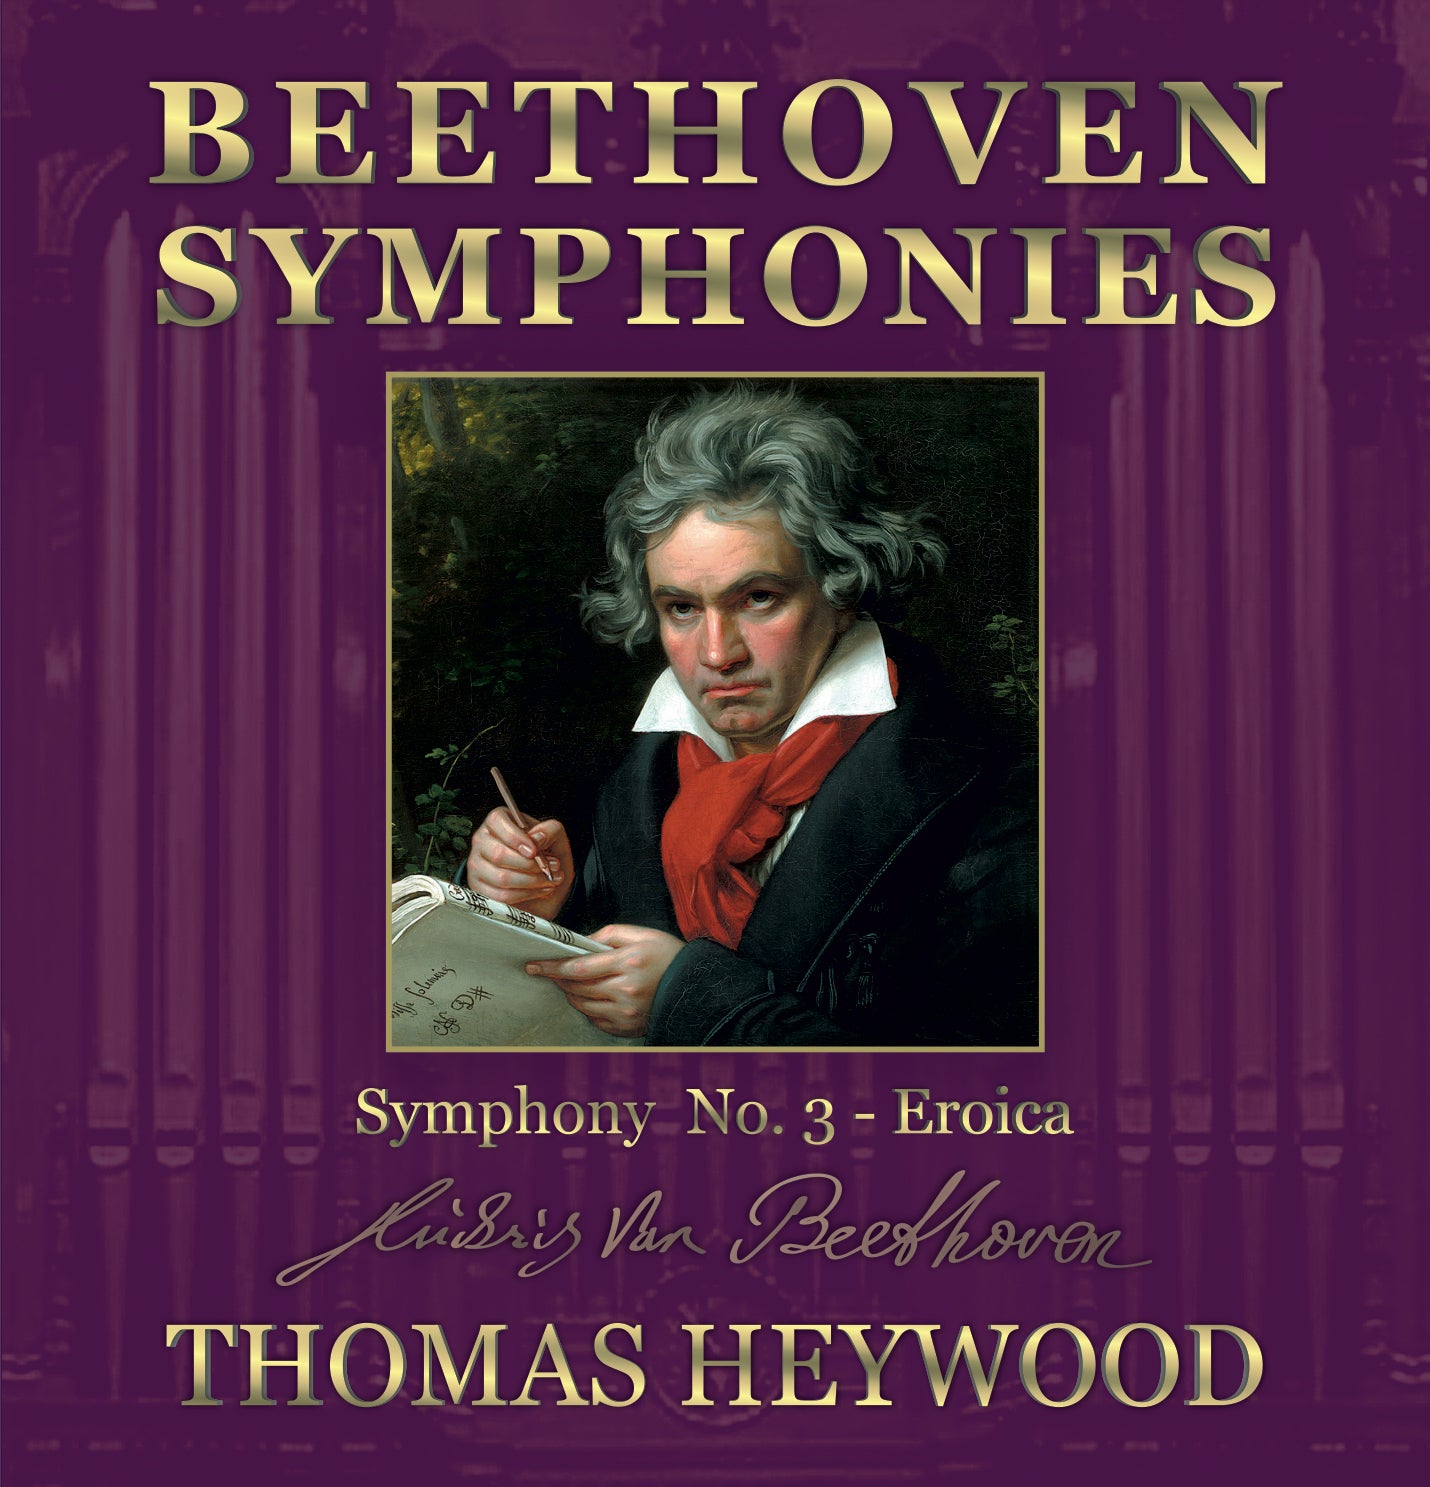 Beethoven/Heywood - Symphony No. 3 in E-flat major, Op. 55 - ‘Eroica’ (MP3 Album) | Thomas Heywood | Concert Organ International